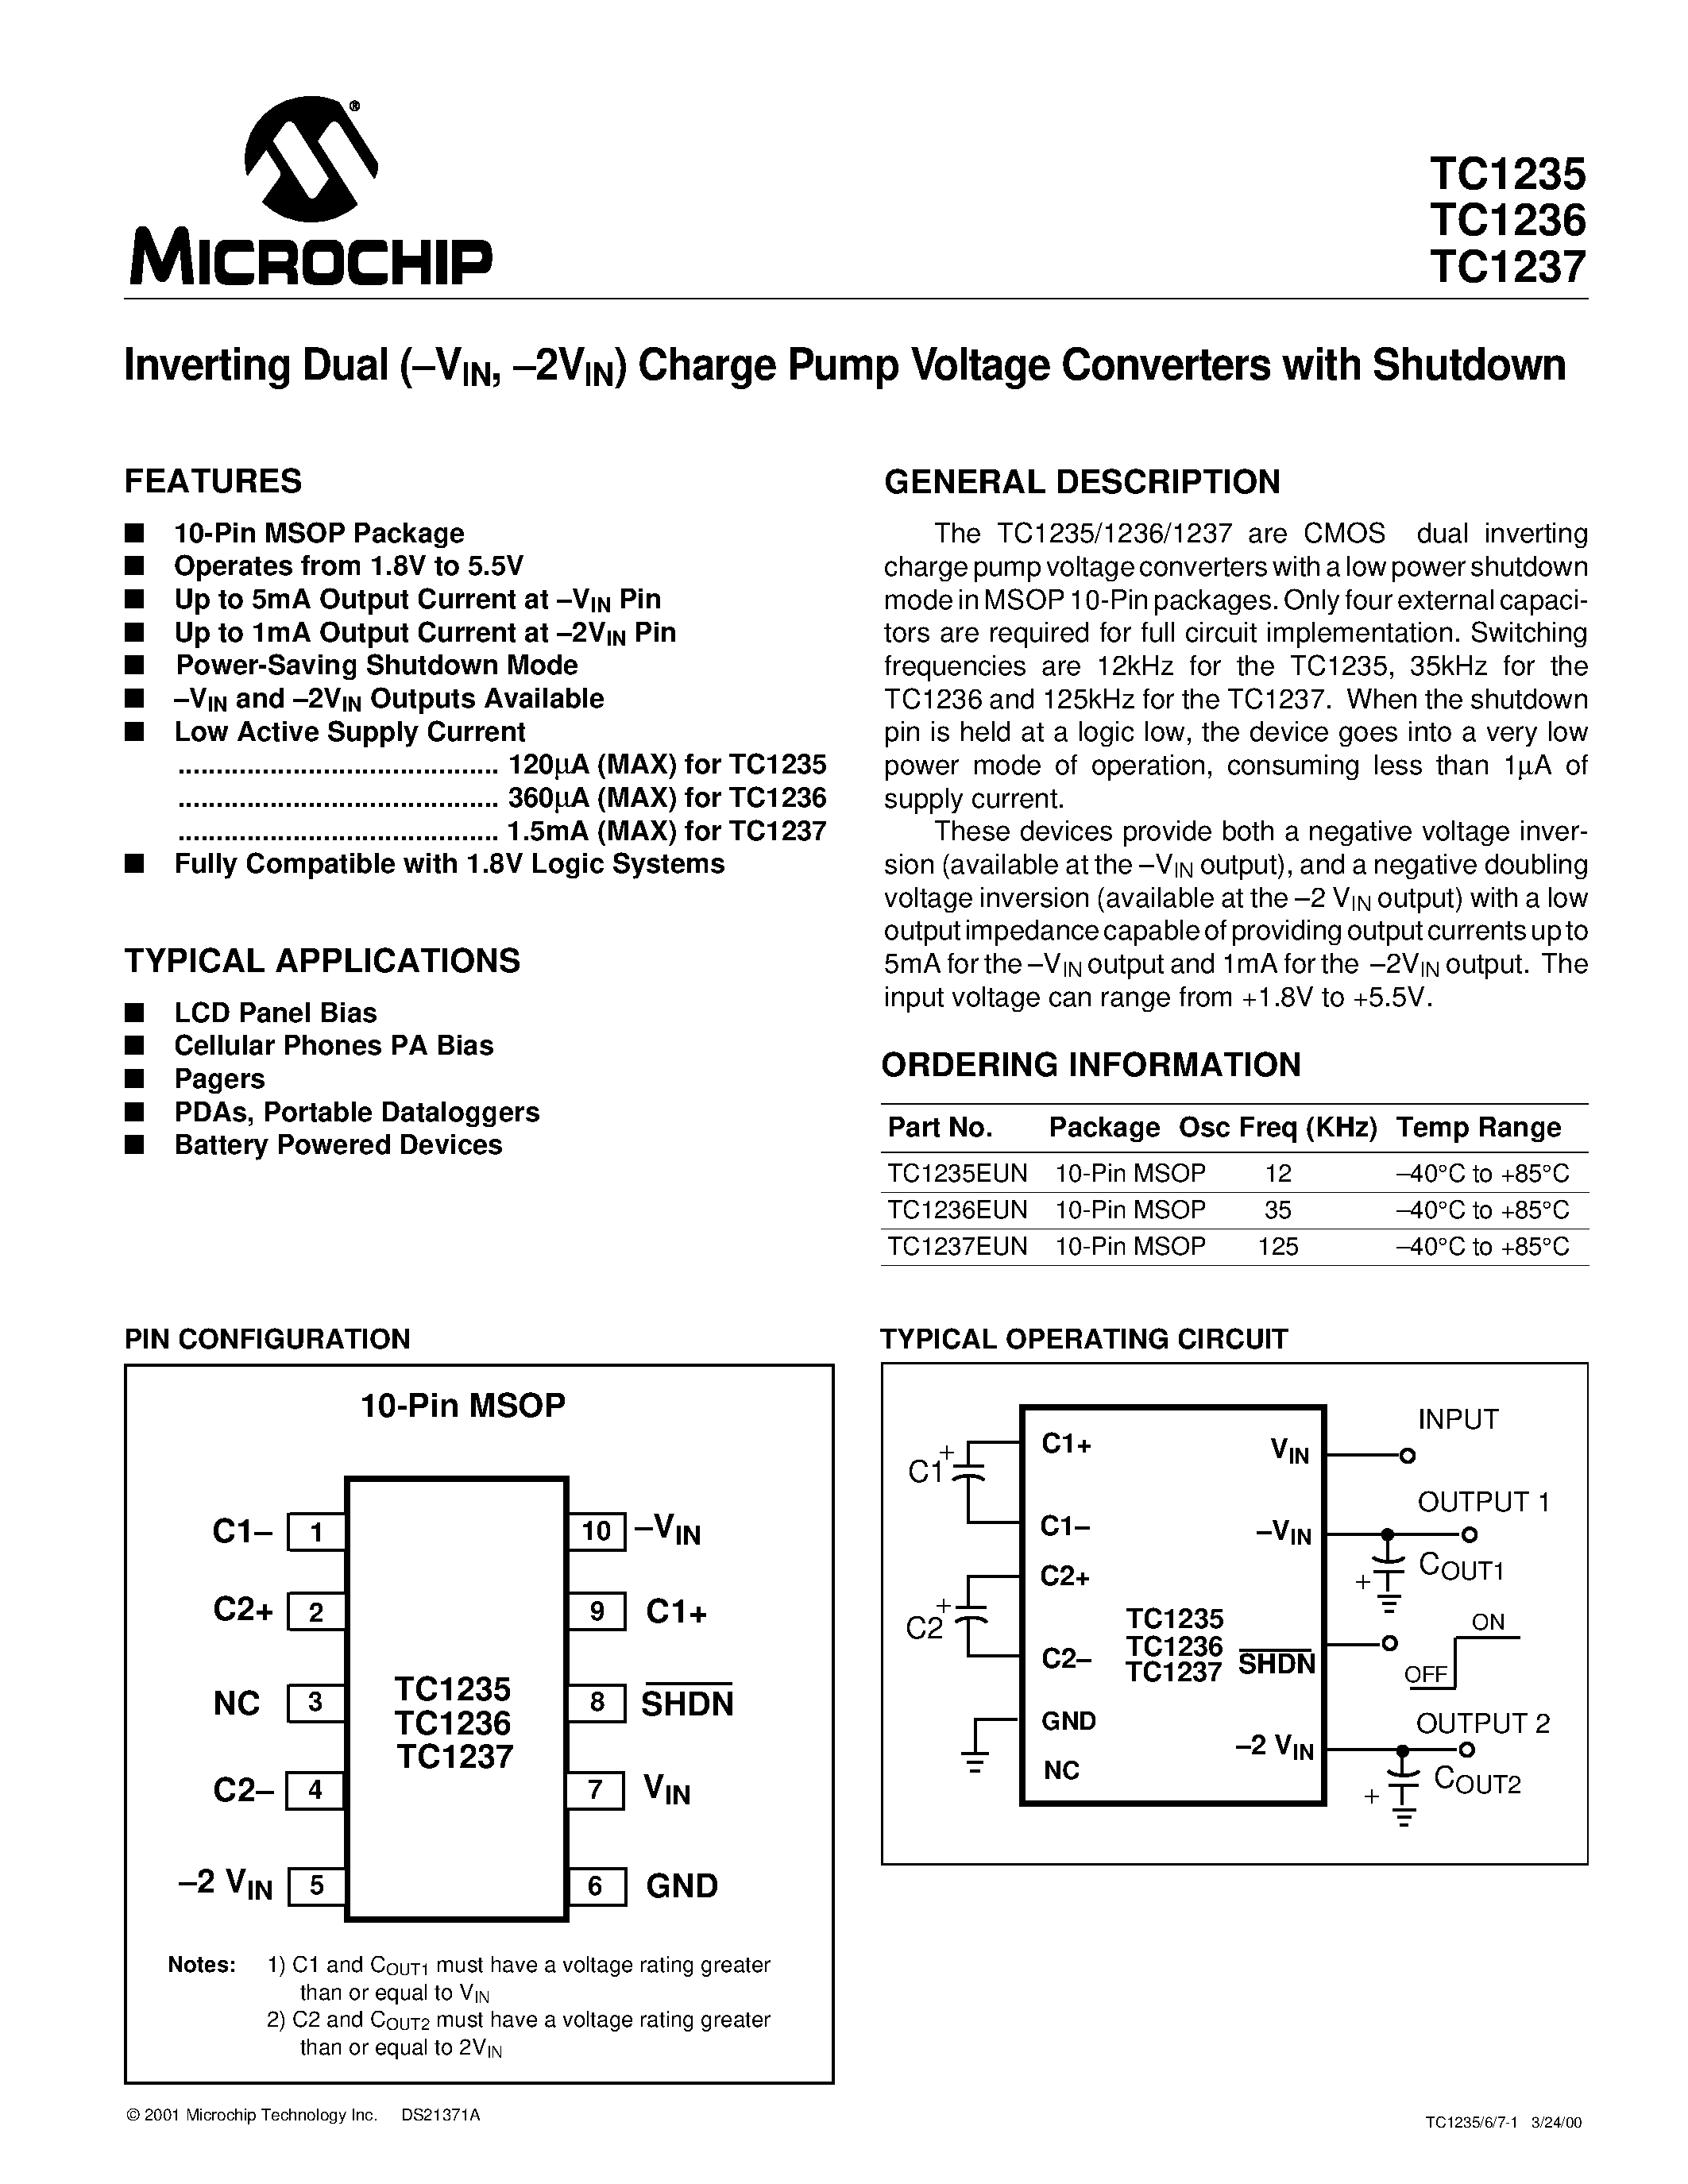 Datasheet TC1235 - (TC1235 / TC1236 / TC1237) Inverting Dual Charge Pump Voltage Converters with Shutdown page 1